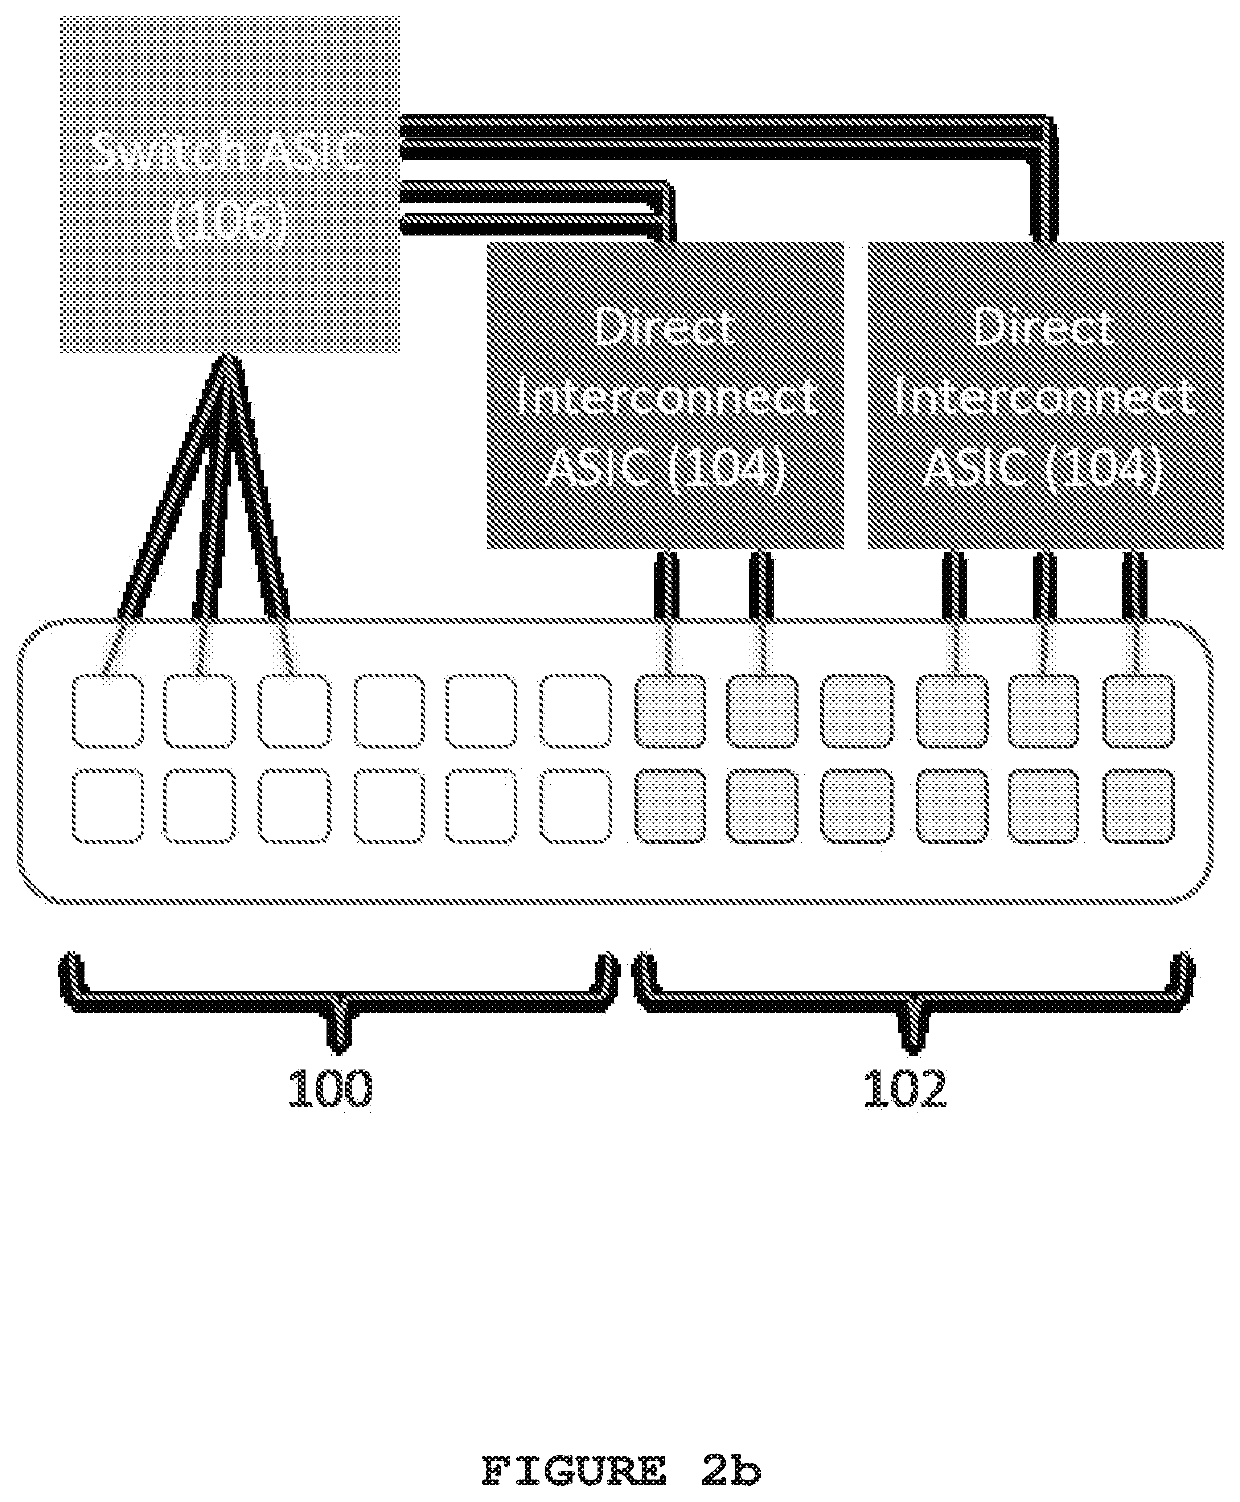 Direct interconnect gateway